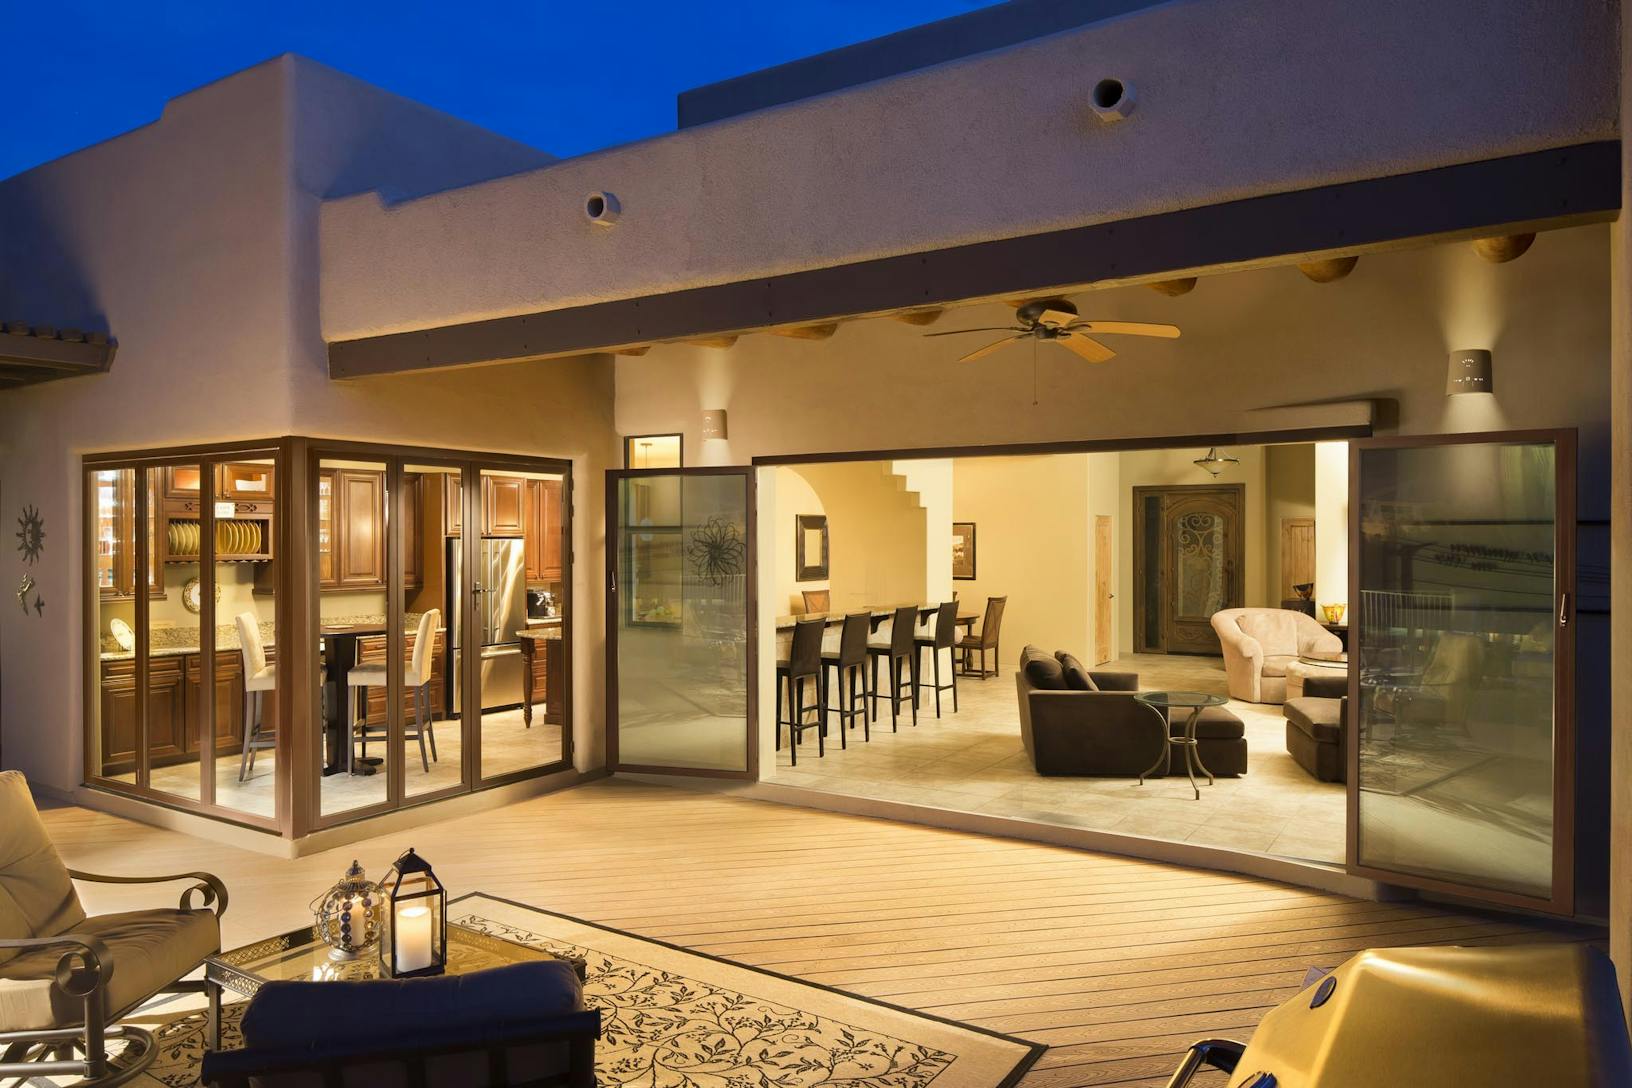 SL45 residential folding patio doors in Mesa, AR